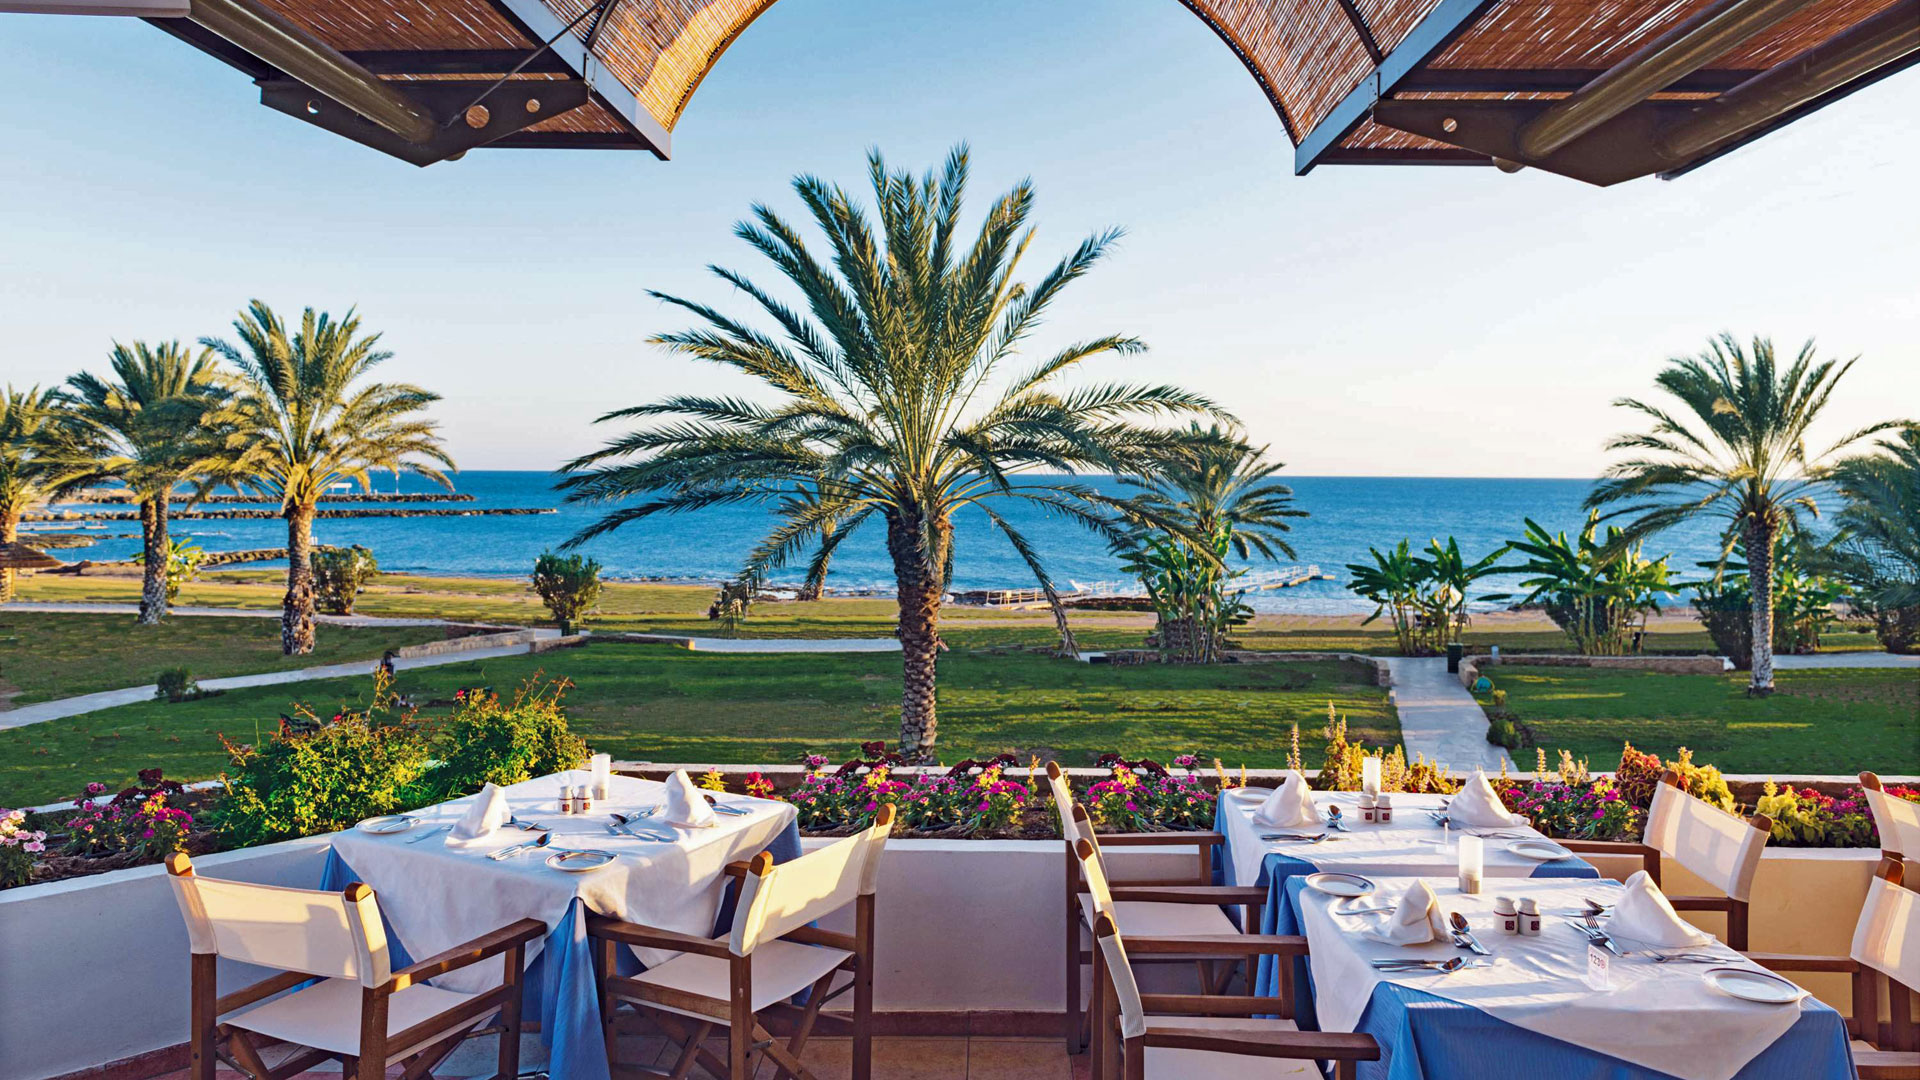 Athena Royal Beach Hotel, Paphos, Zypern